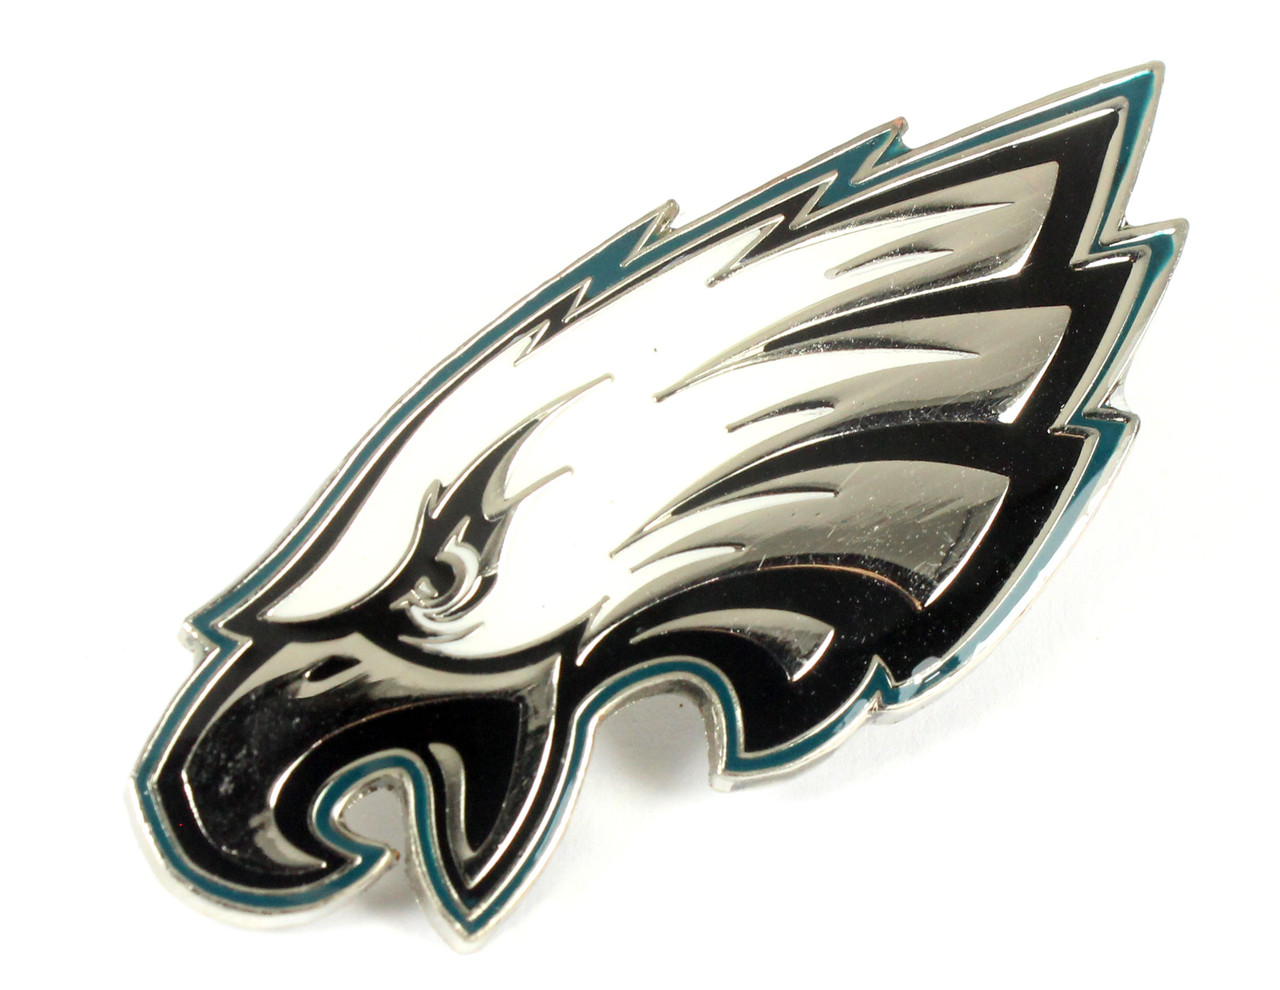 Pin on Philadelphia Eagles